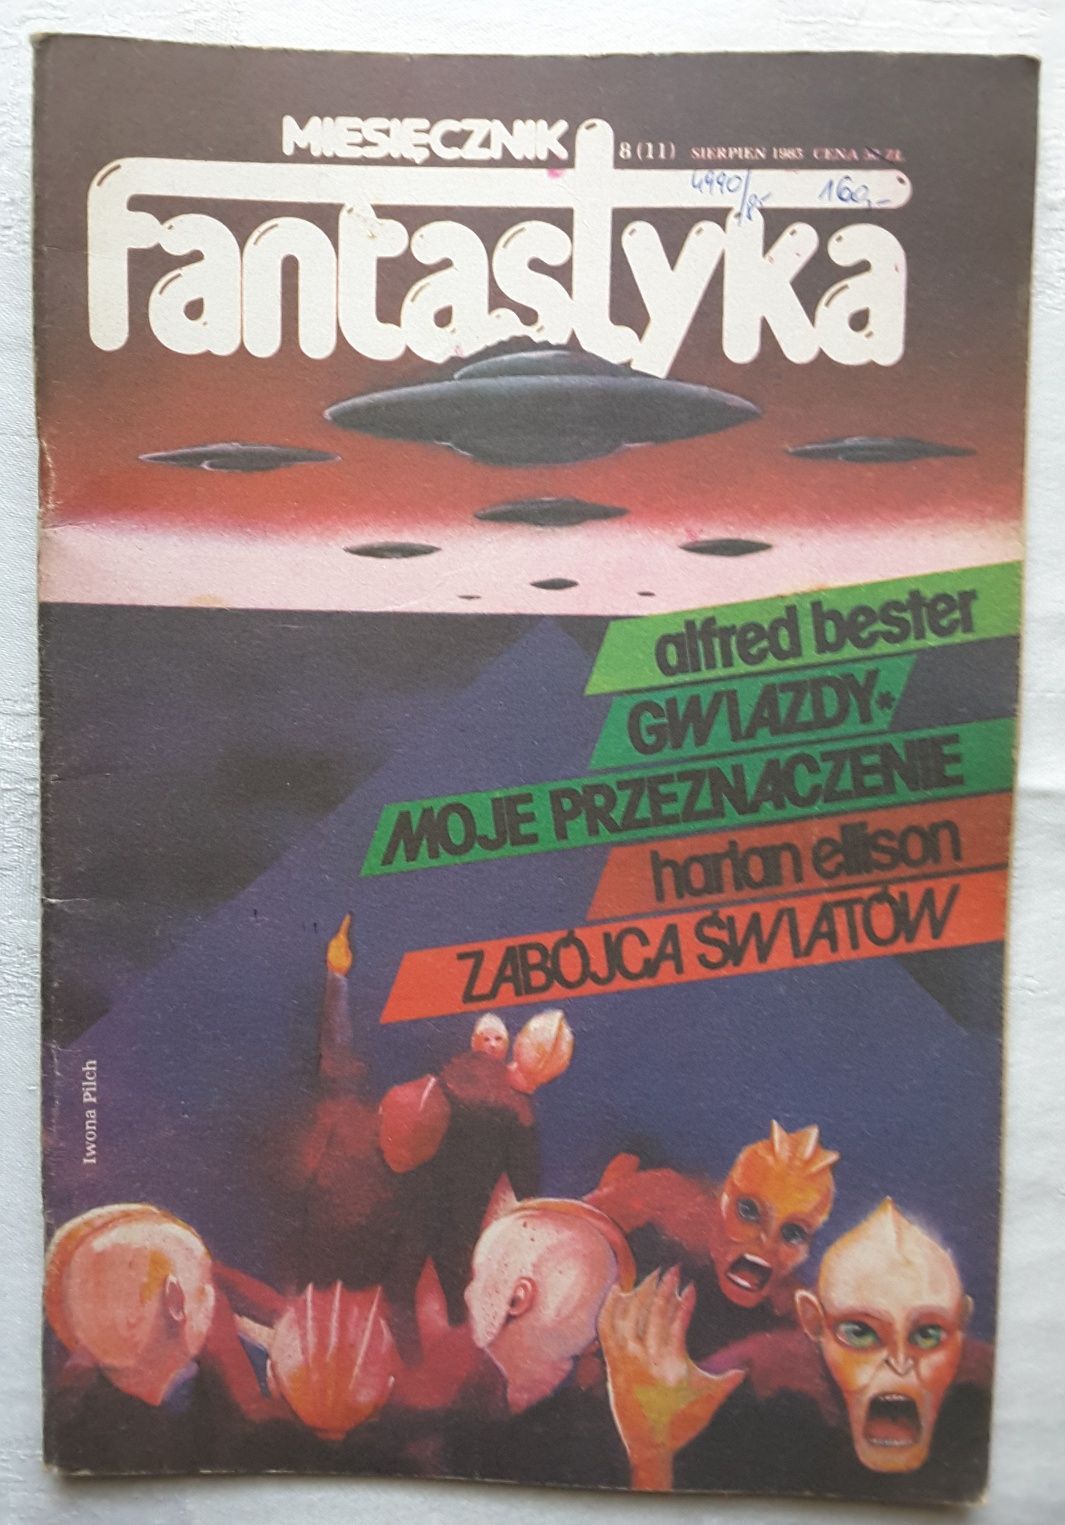 Czasopismo Fantastyka nr 8 (11) Sierpień 1983